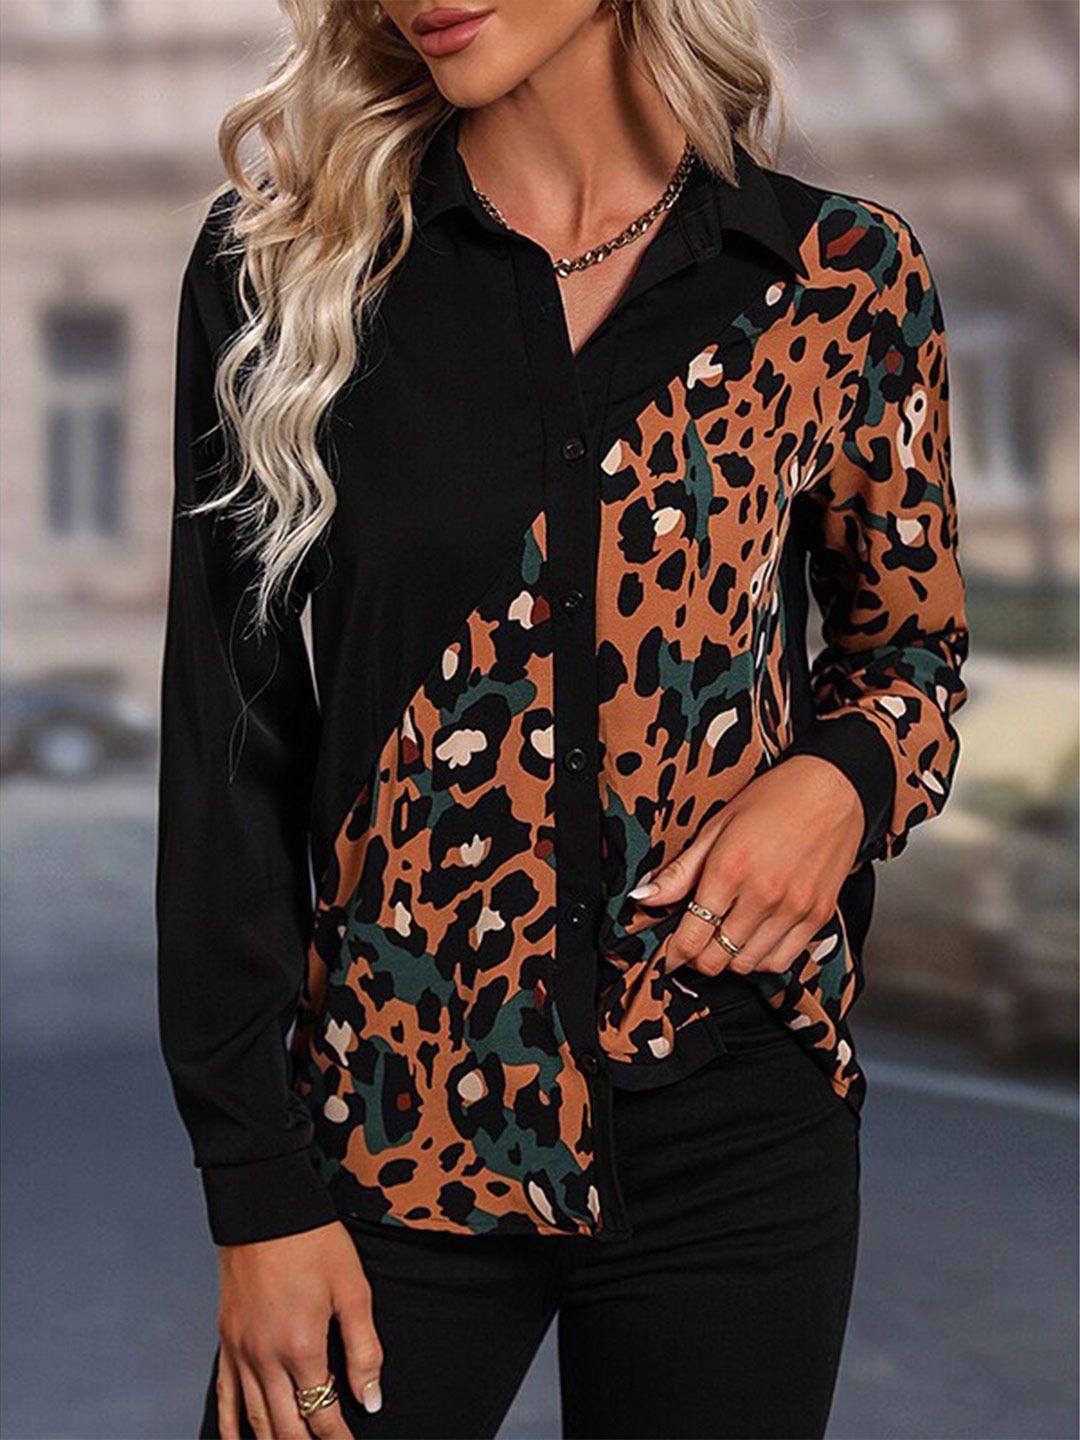 stylecast women black animal opaque printed casual shirt